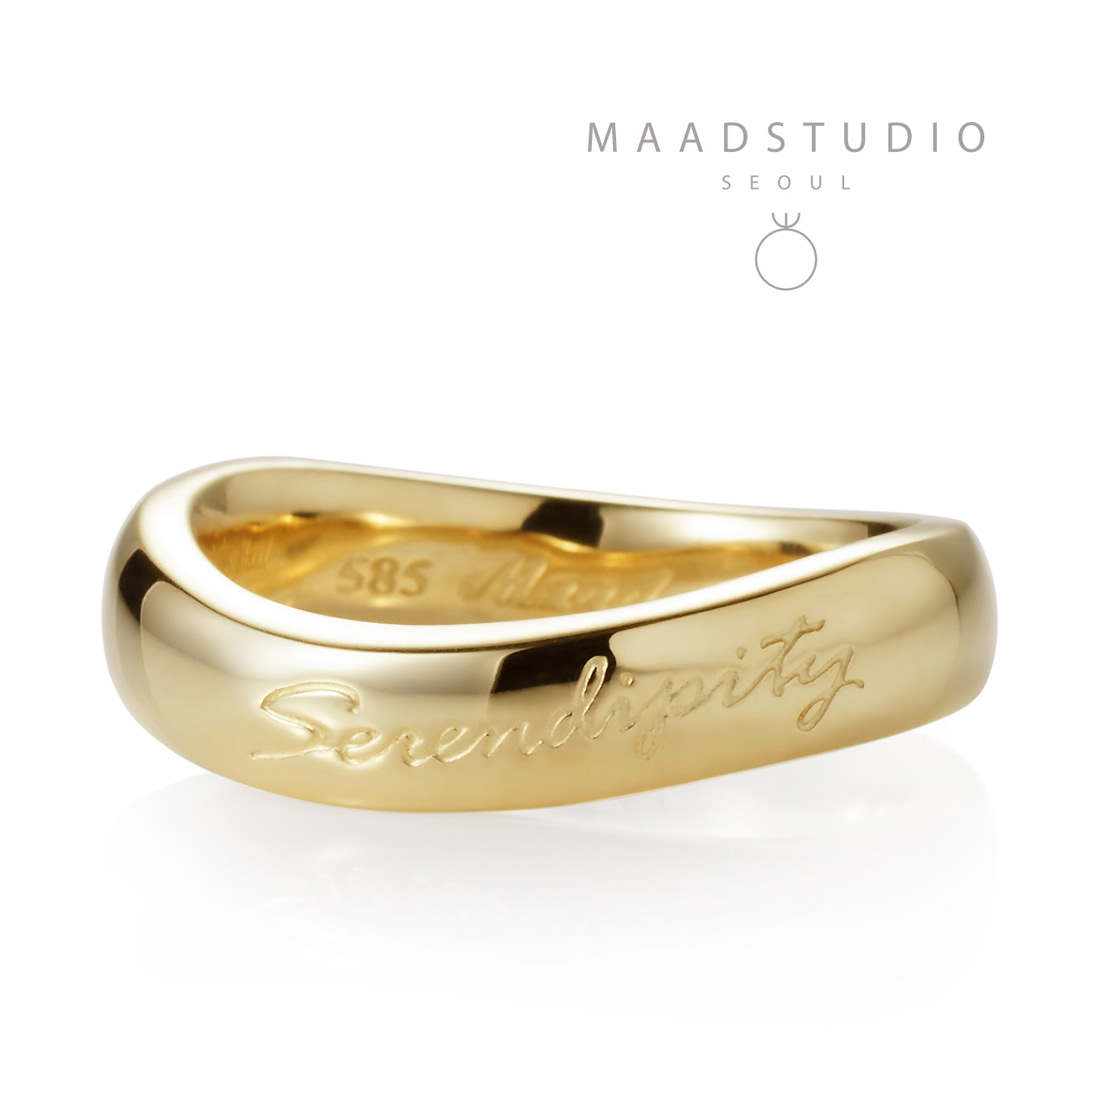 Serendipity ring (L) 14K gold